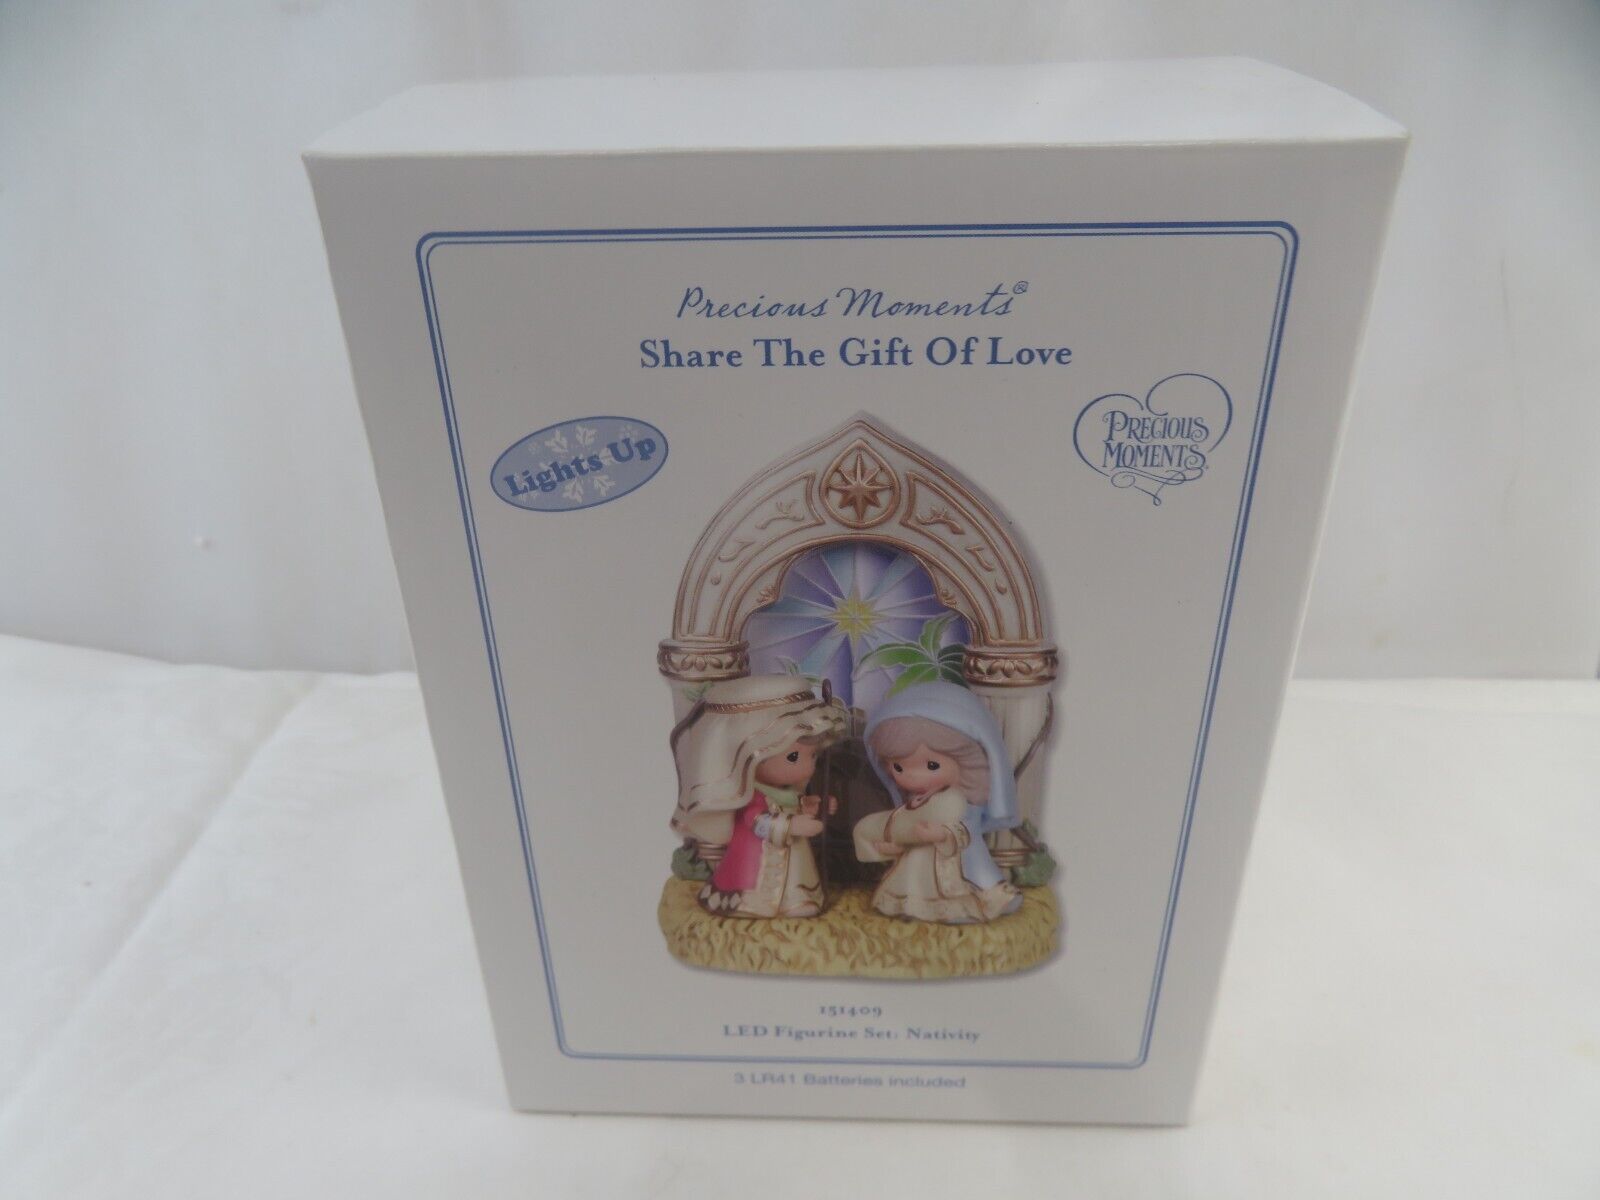 Precious Moments 151409 LED Nativity Set Share The Gift Of Love Figure Figurine